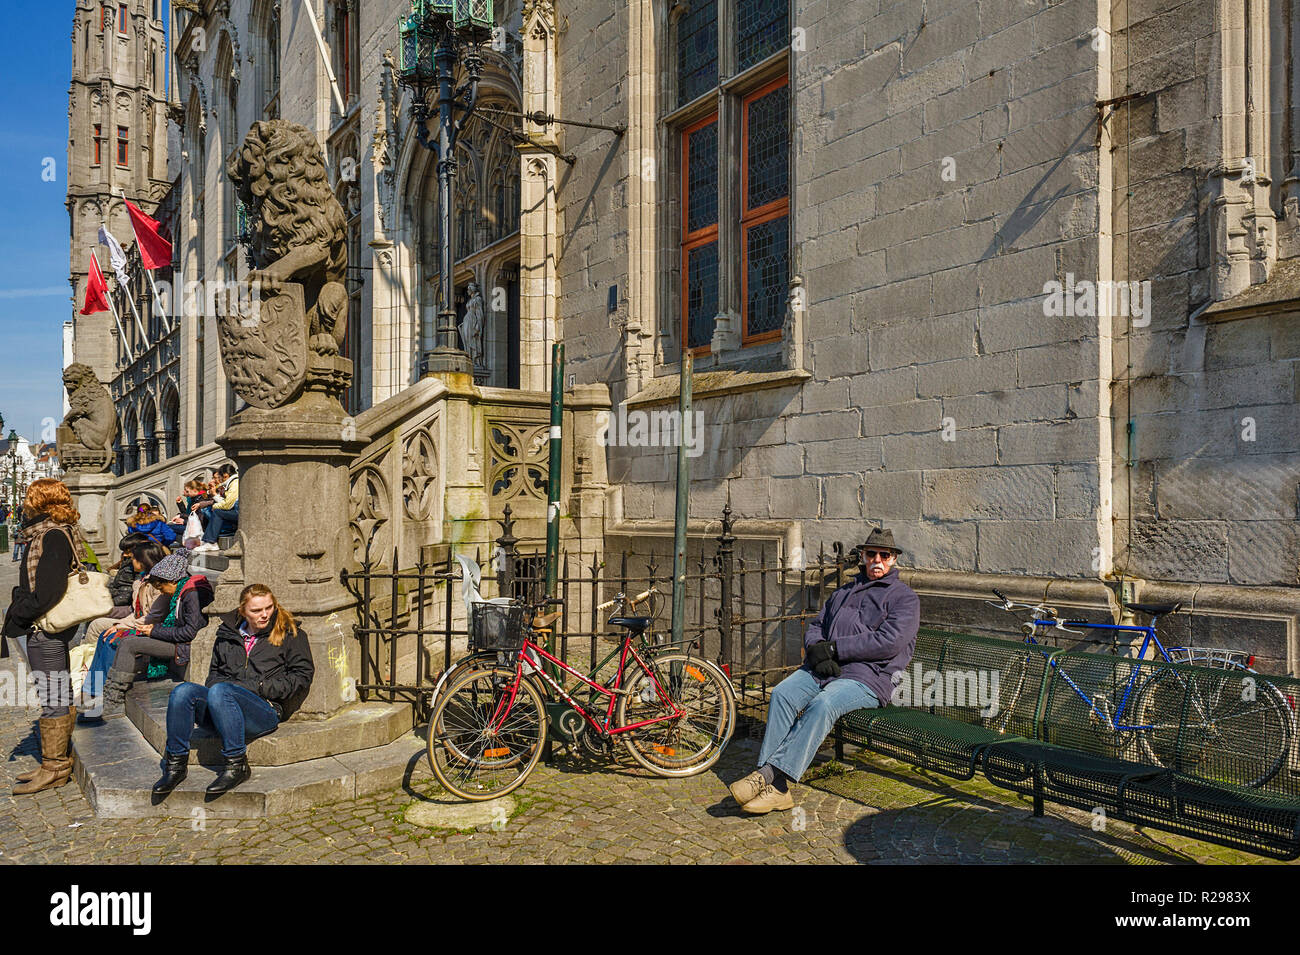 Provinciaal Hof (Provincial Palace), Bruges, Belgium, Stock Photo